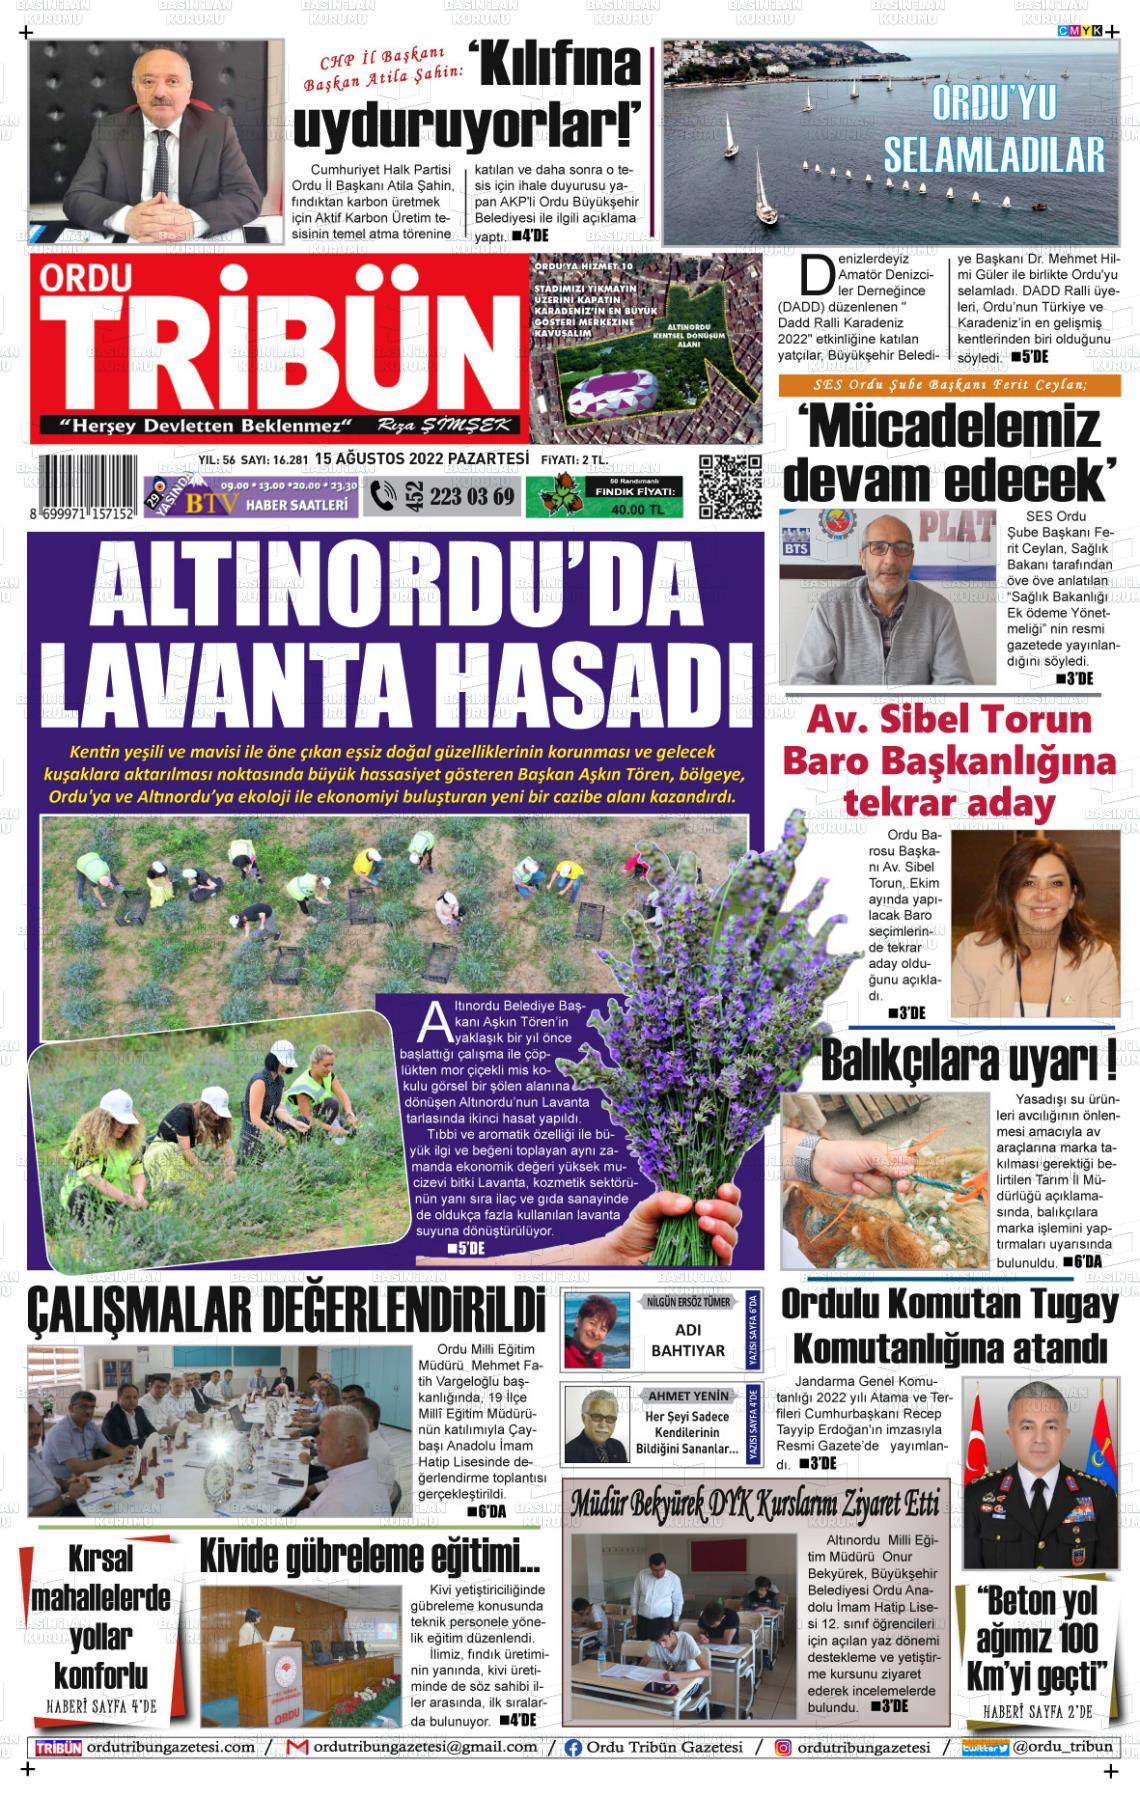 15 Ağustos 2022 Ordu Tribün Gazete Manşeti